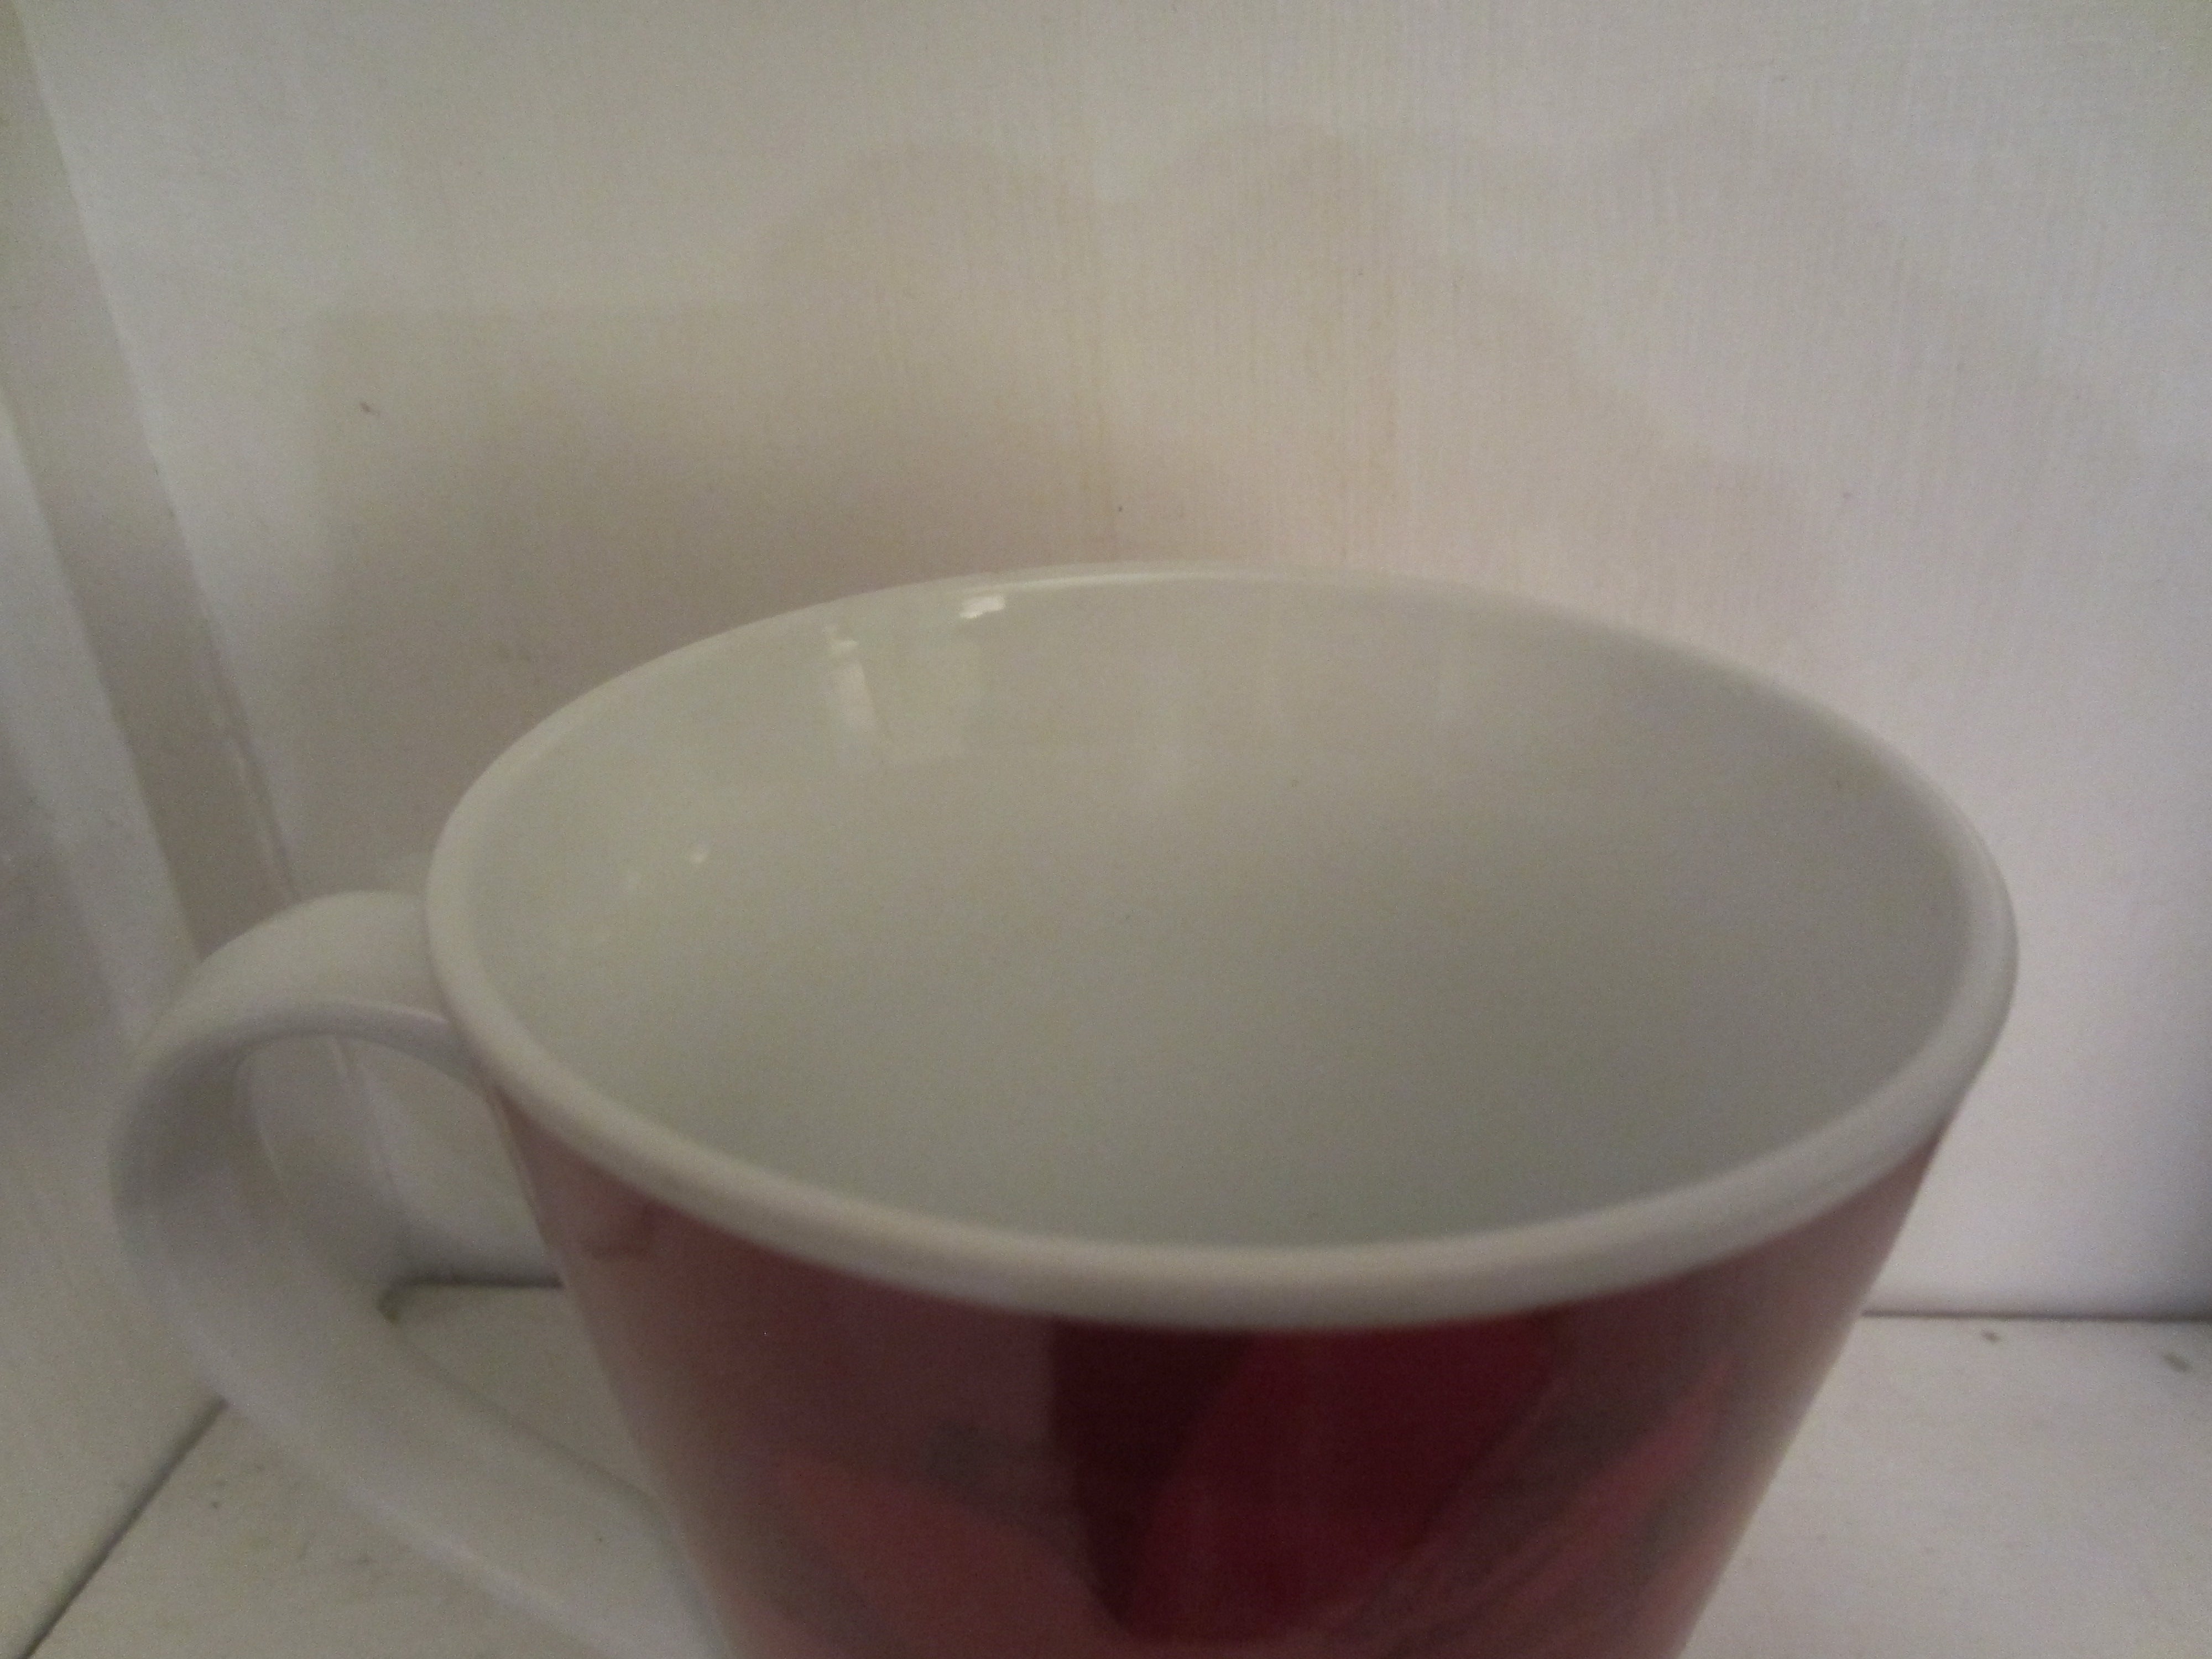 Starbucks 2014 Red Starburst Abstract 12 Ounce Ceramic Mug